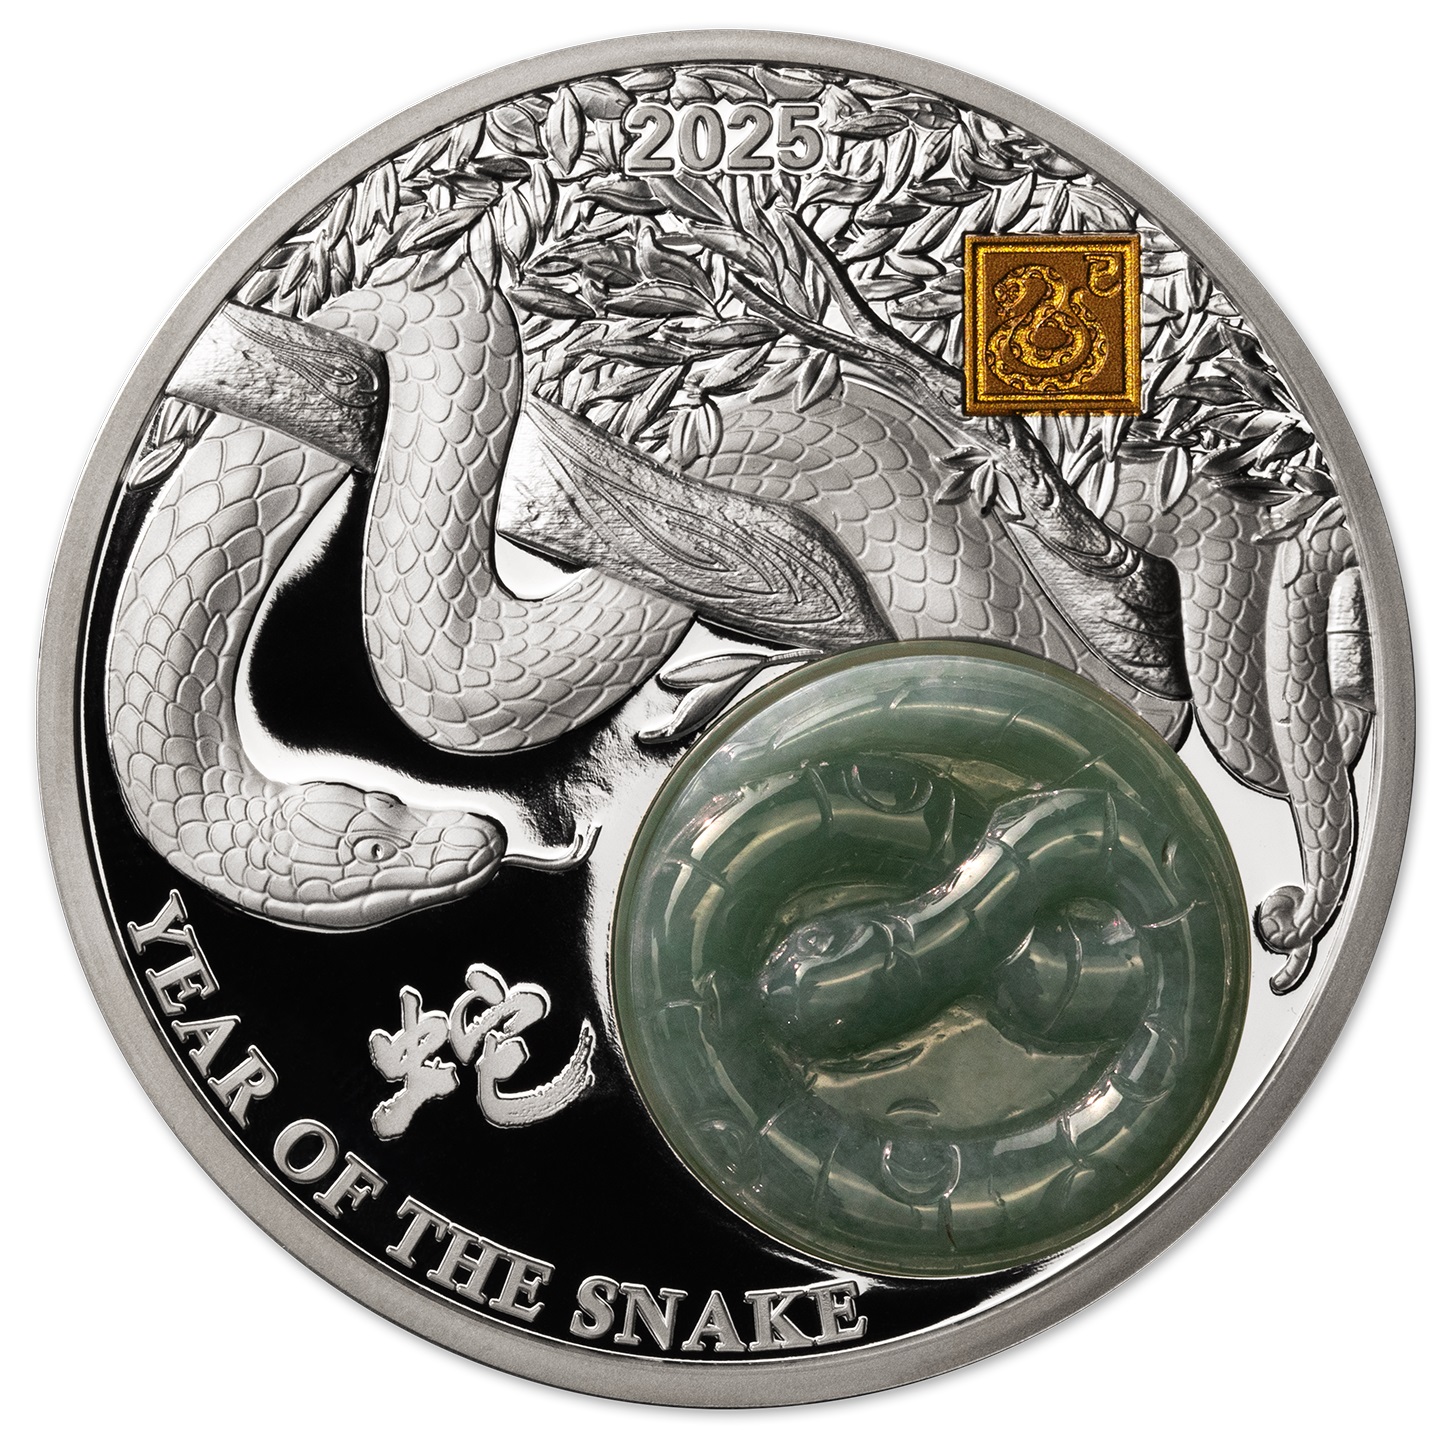 (W034.25.F.2025.2.oz.Ag.1572230118) 25 Francs Burundi 2025 2 oz Proof silver - Year of the Snake Reverse (zoom)